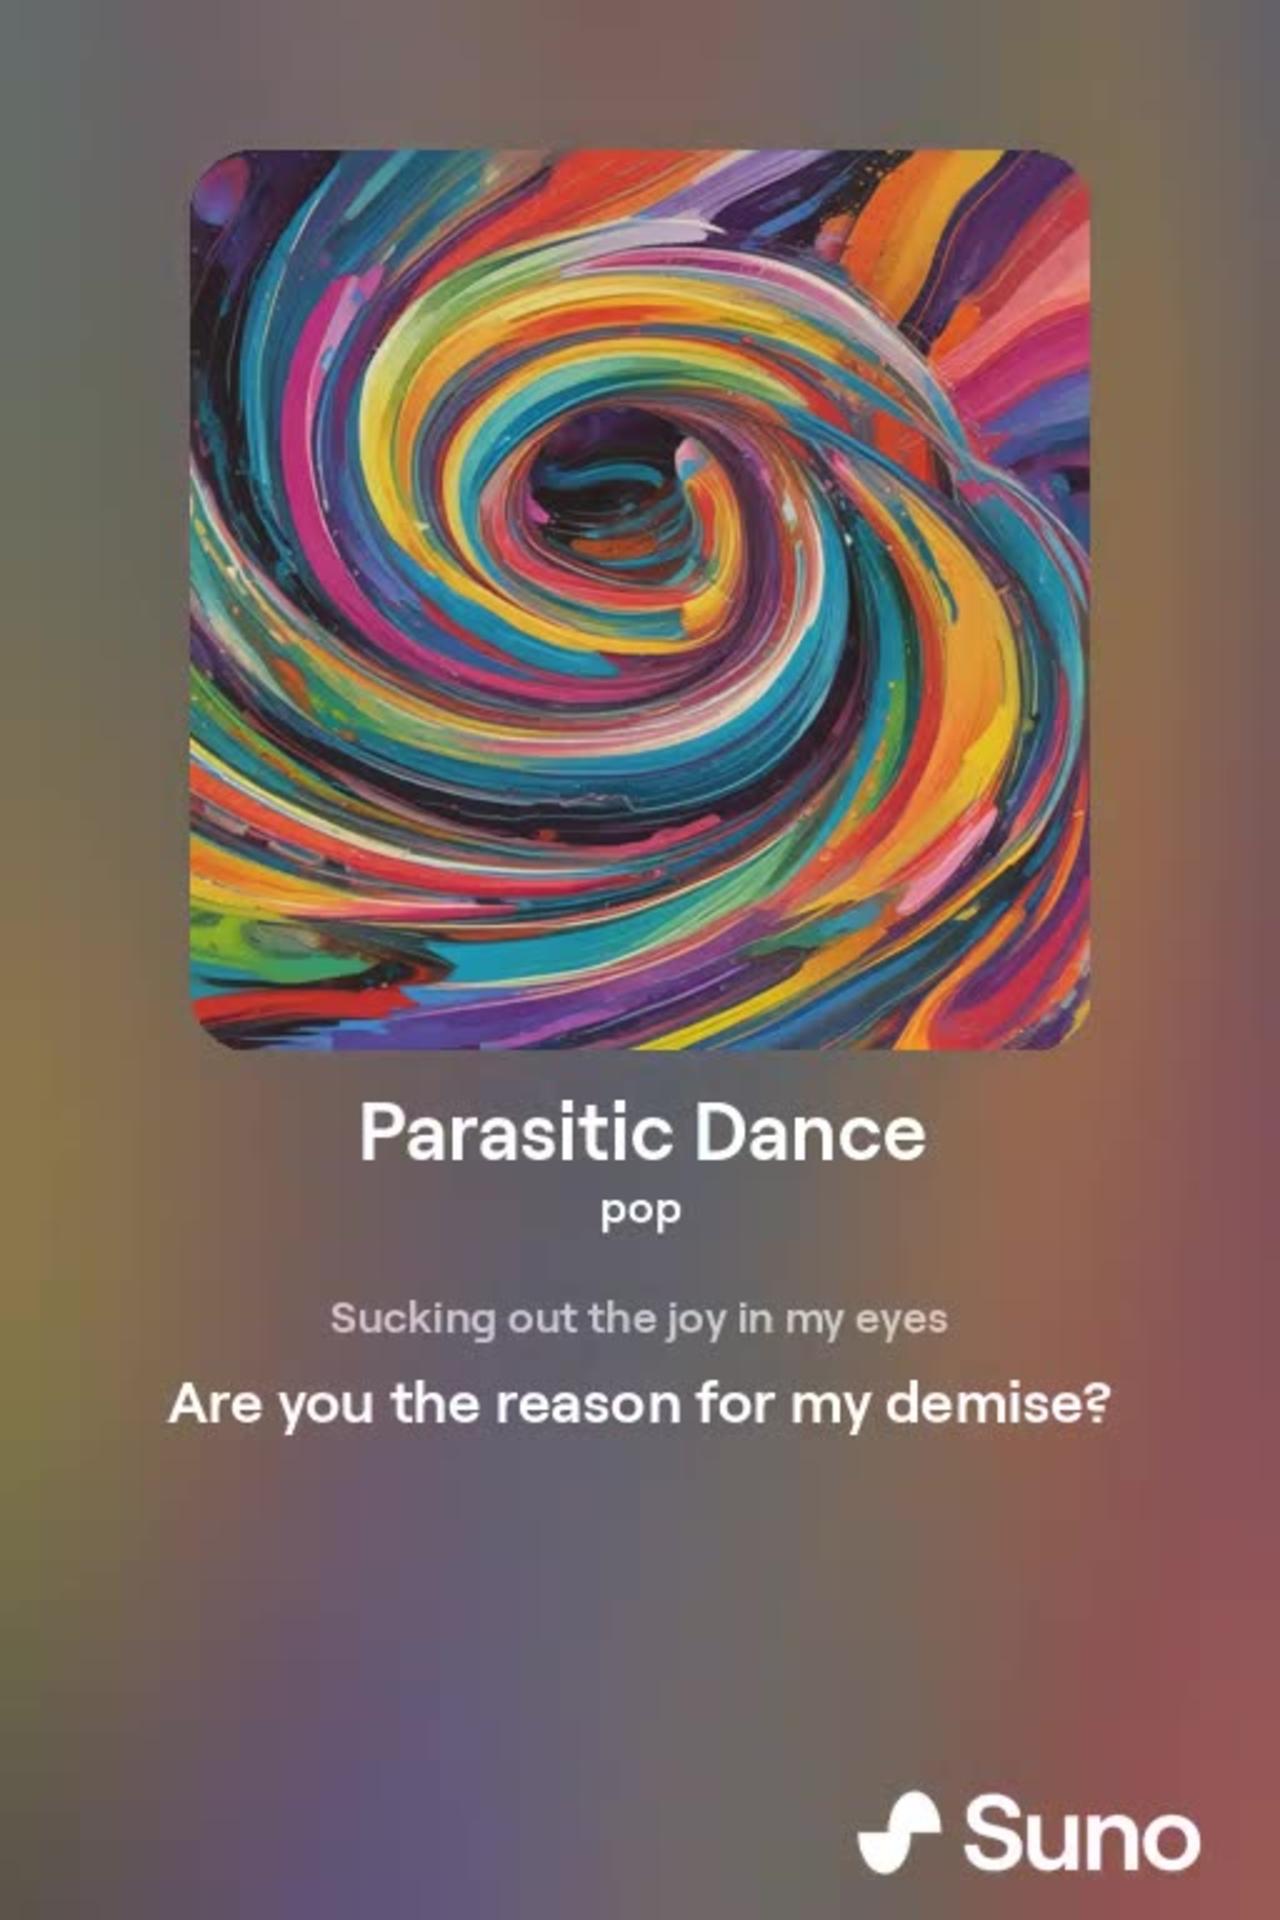 Parasitic dance